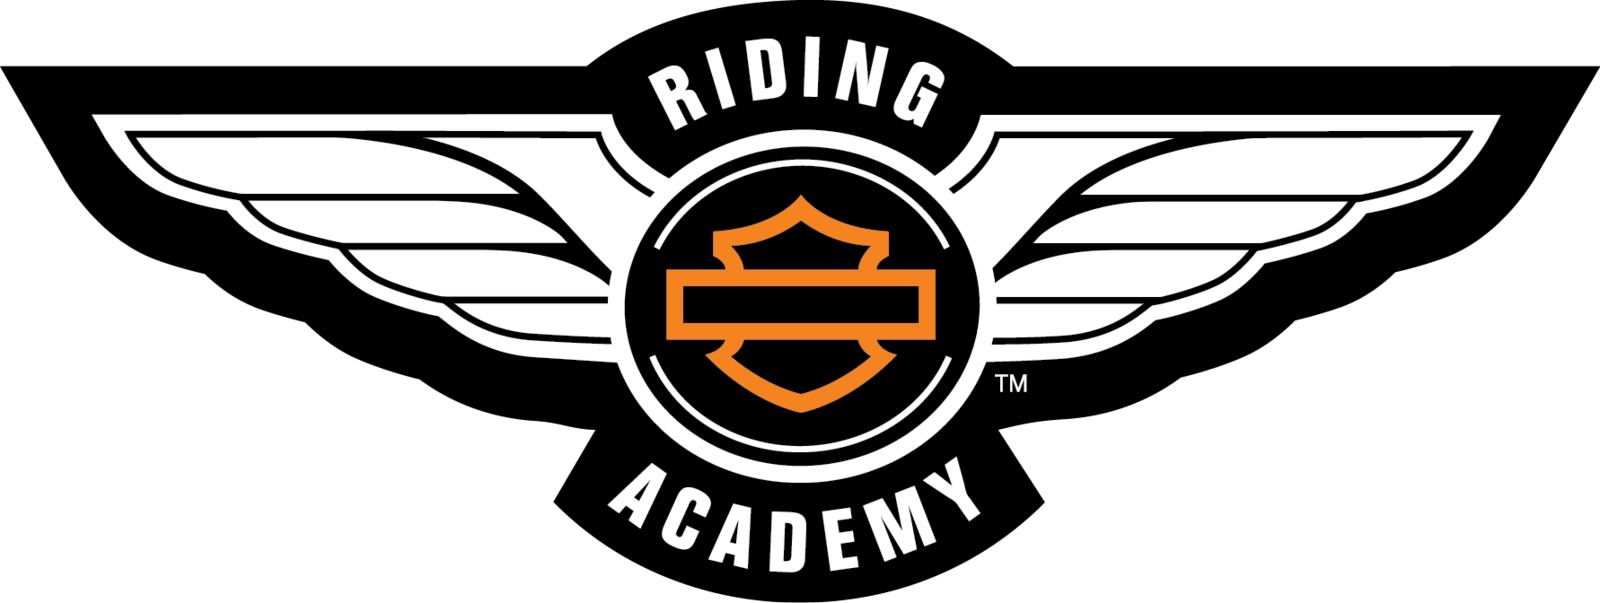 Harley Davidson Logo Binicilik Akademisi PNG